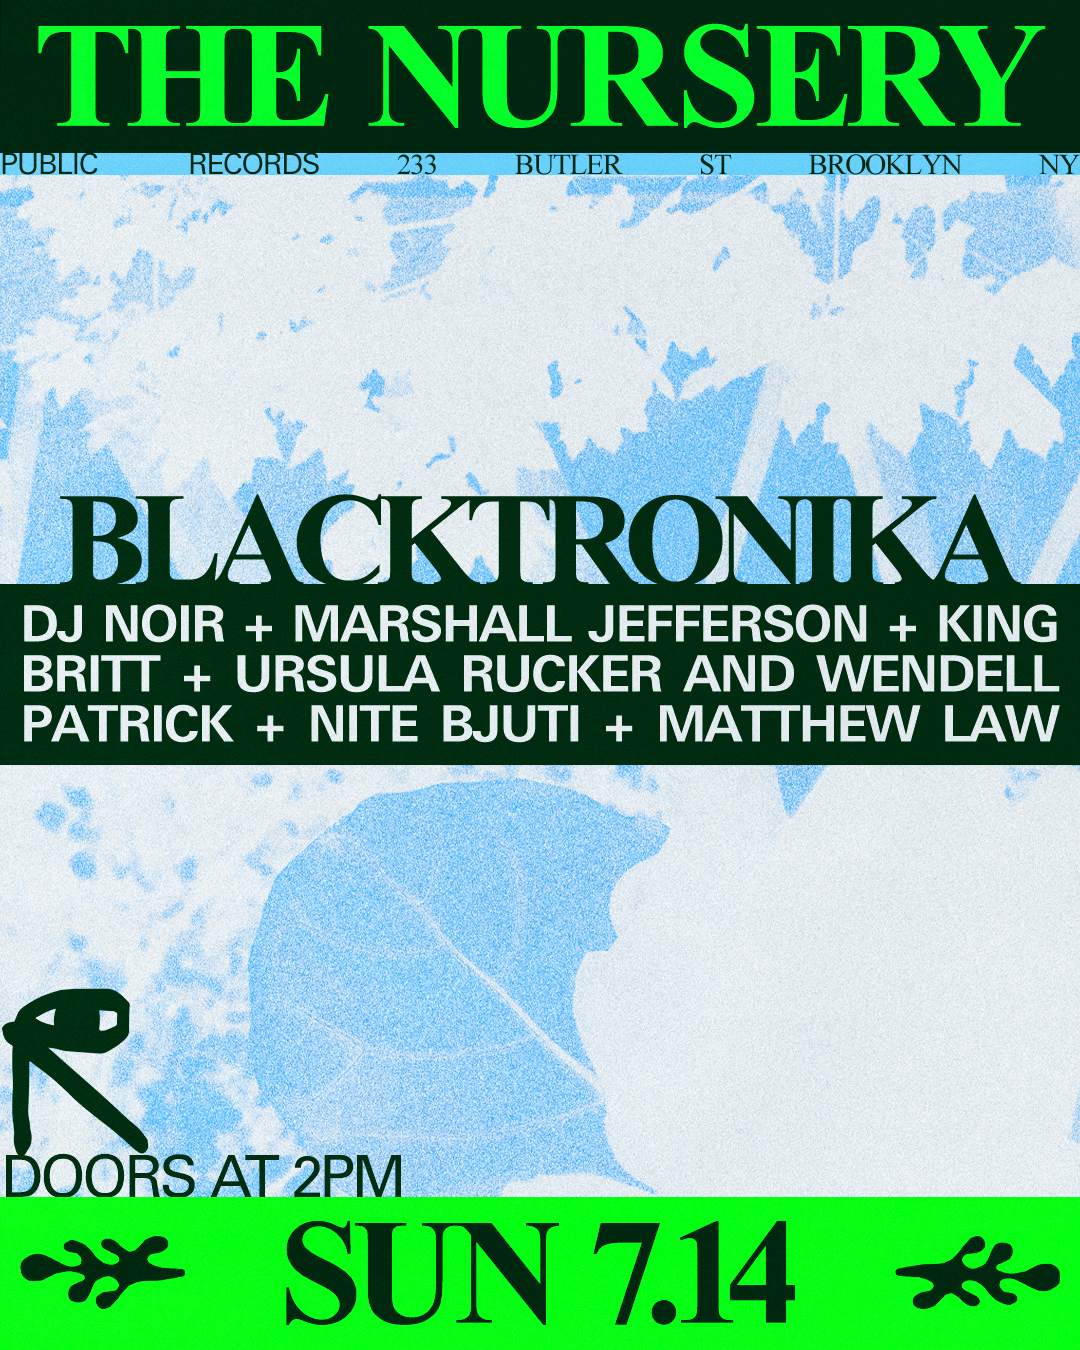 Blacktronika in The Nursery: DJ Noir + Marshall Jefferson + King Britt + more - フライヤー表